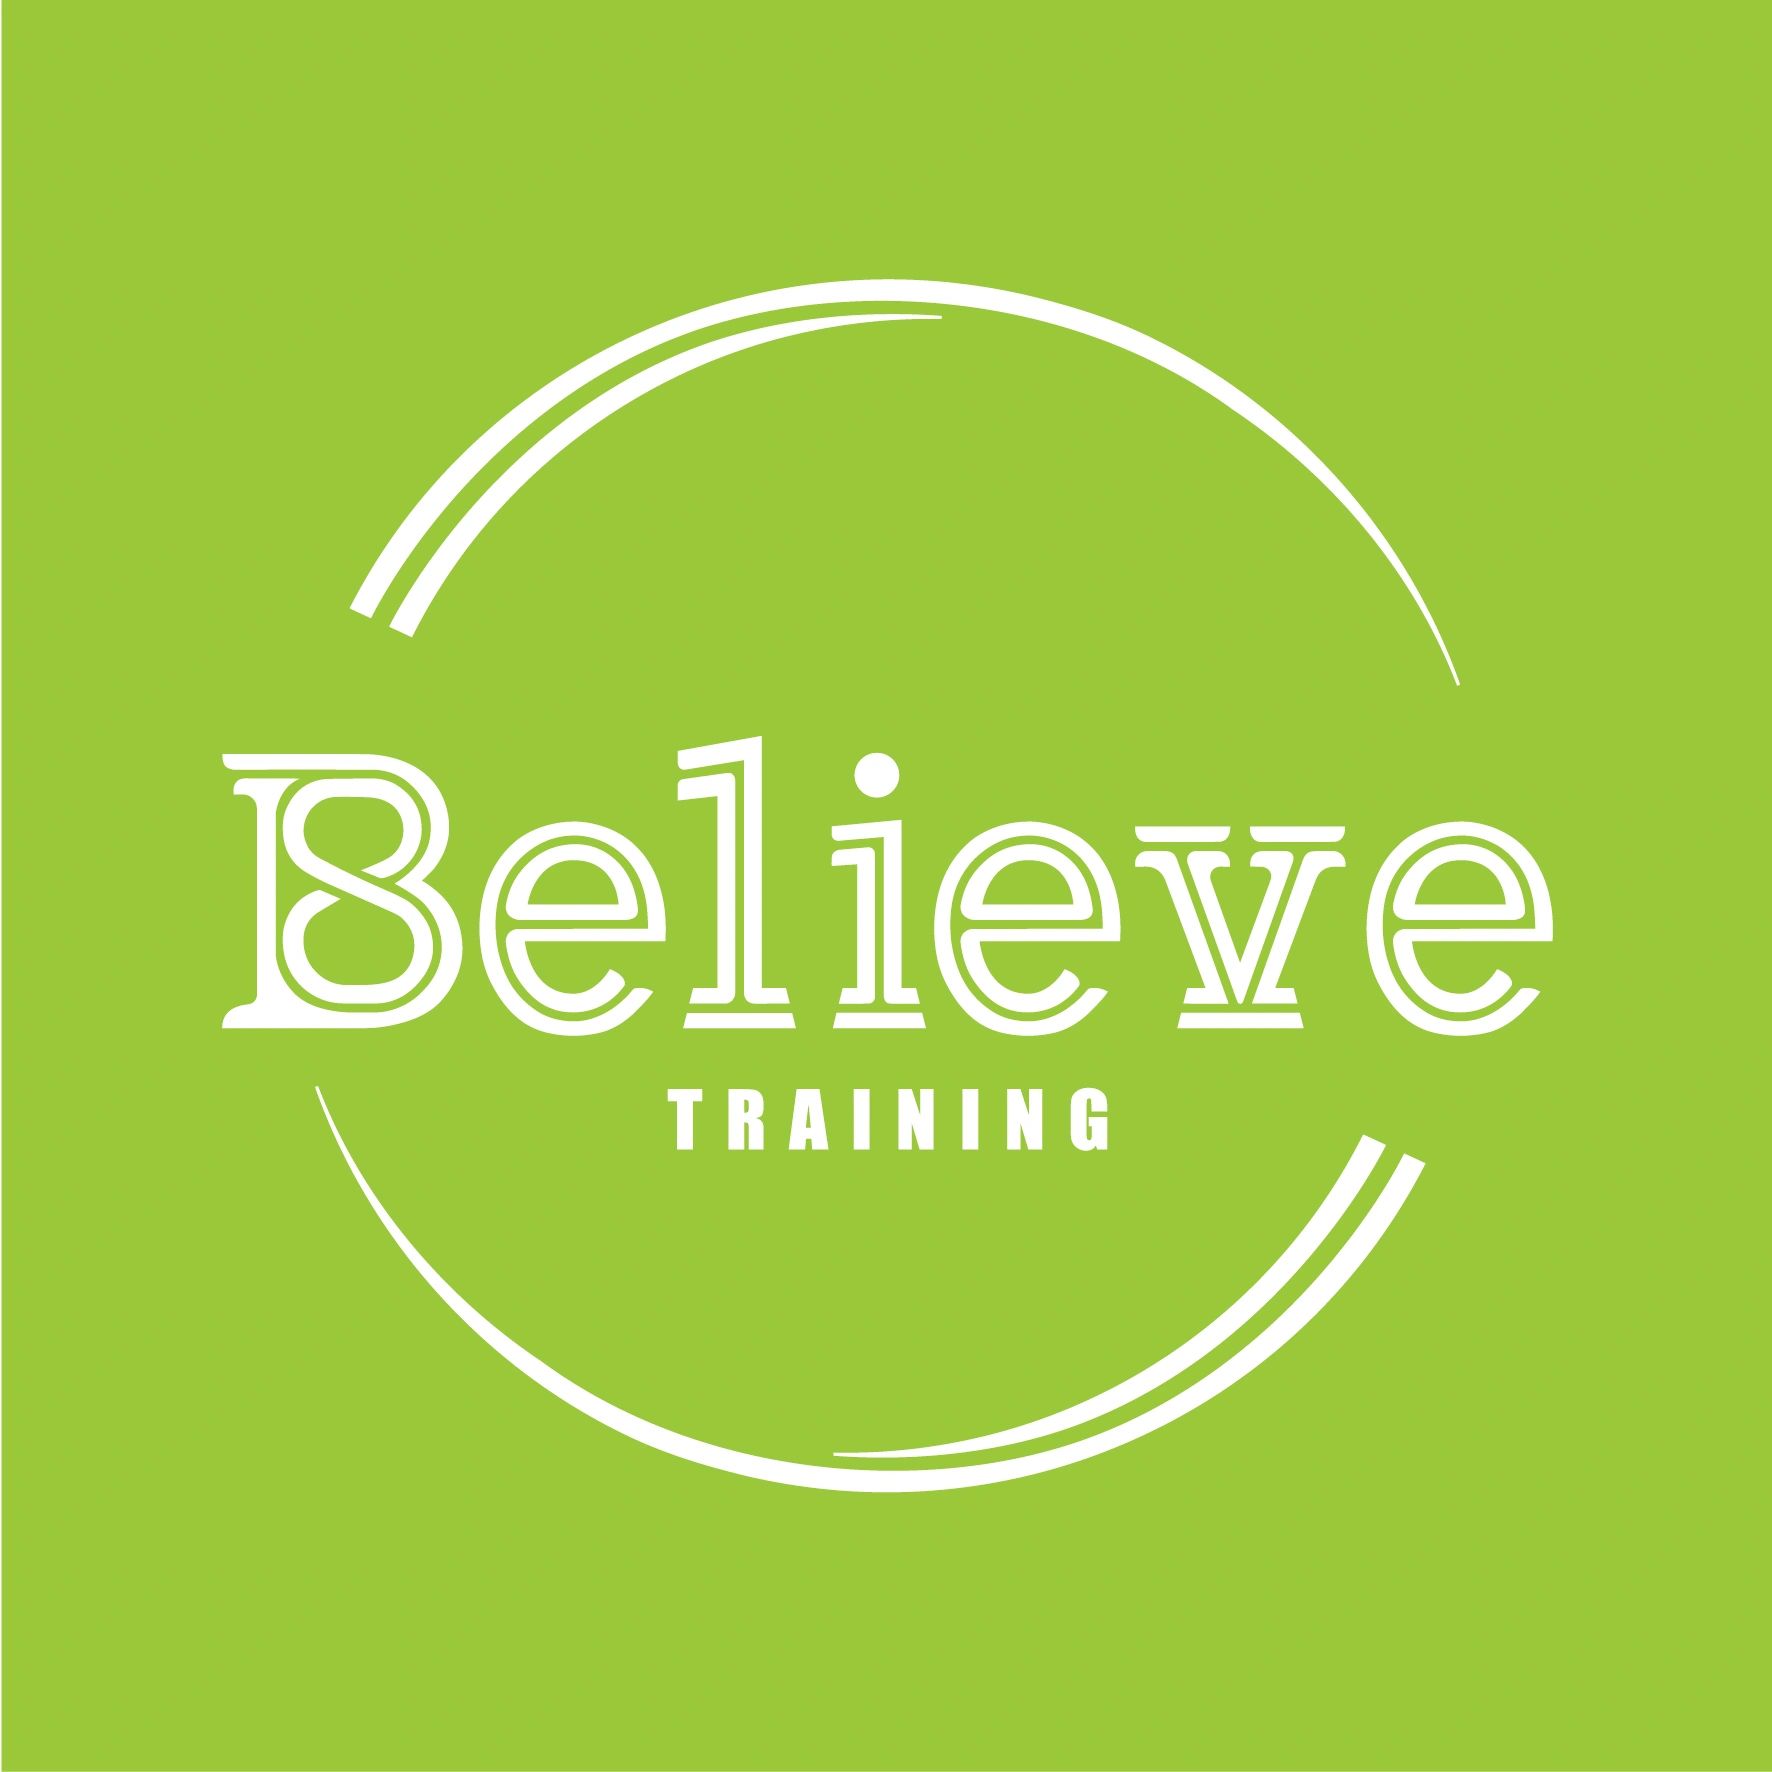 Believe Training
相信訓練